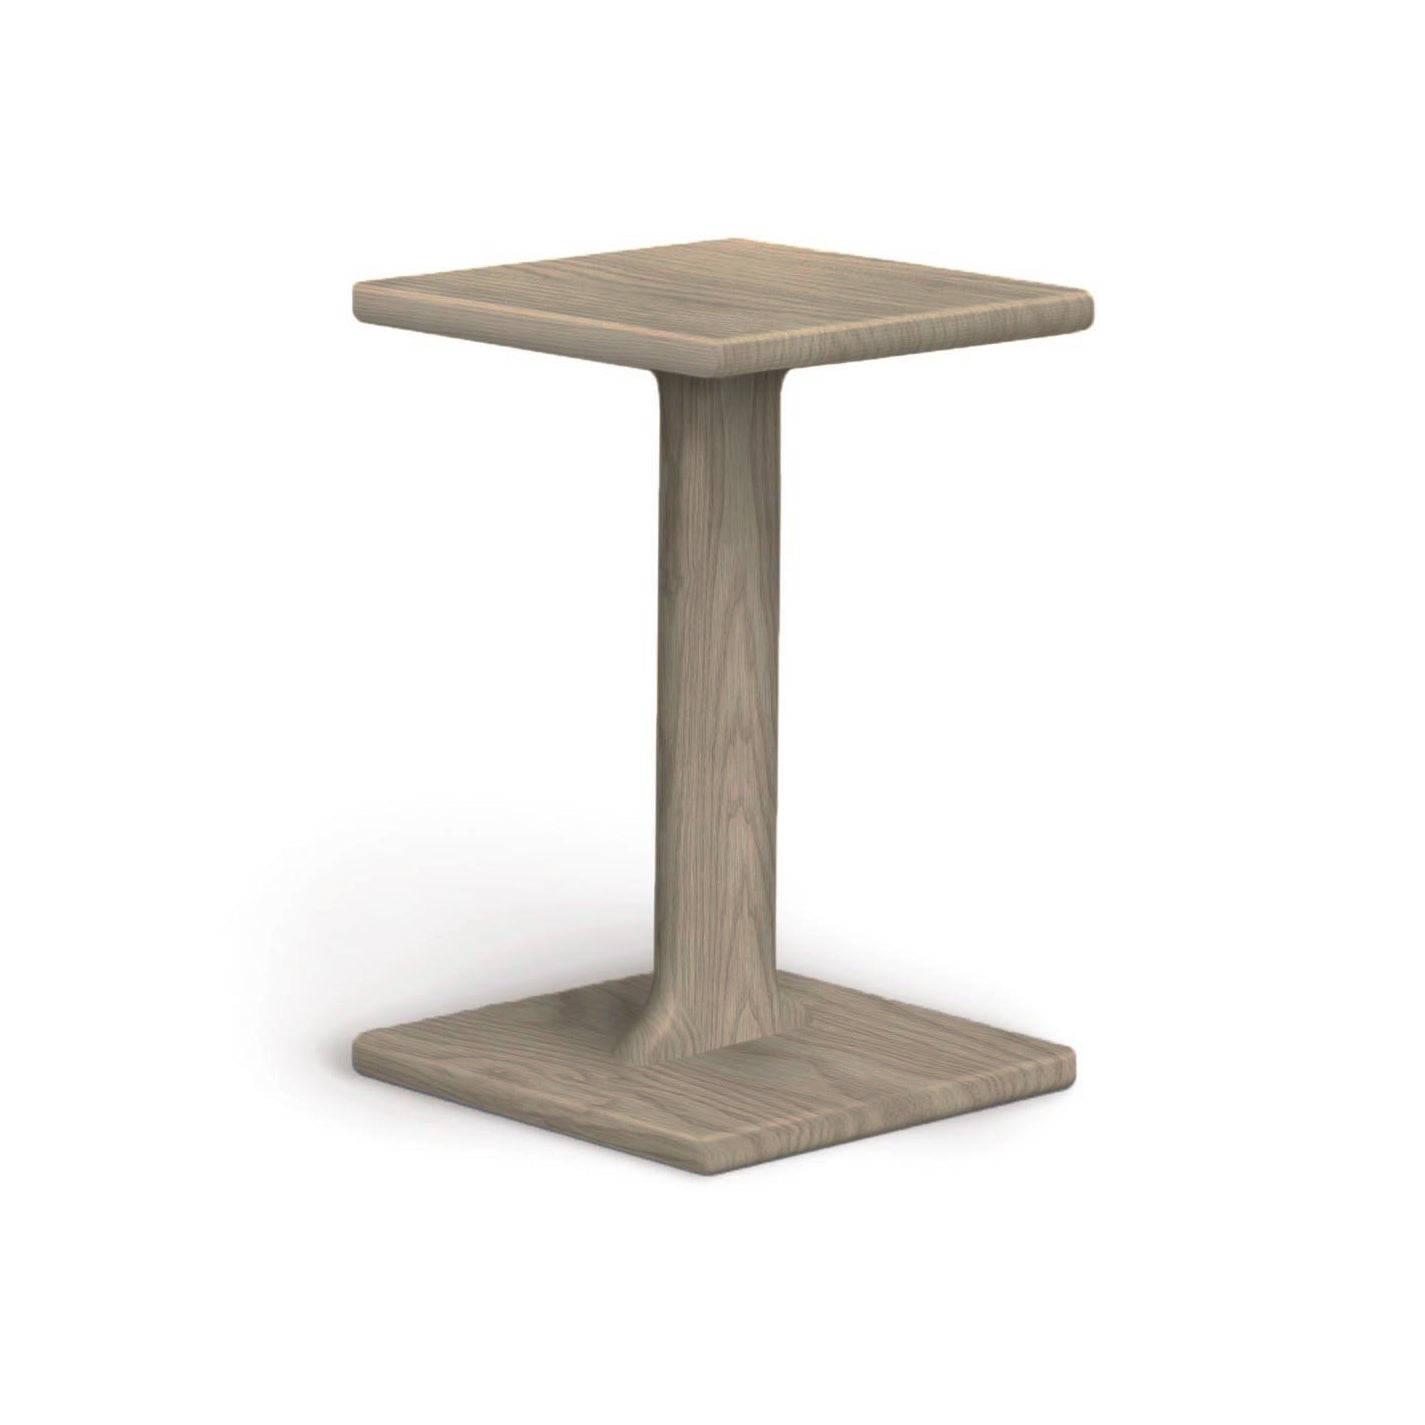 A Sierra Chair Table by Copeland Furniture.